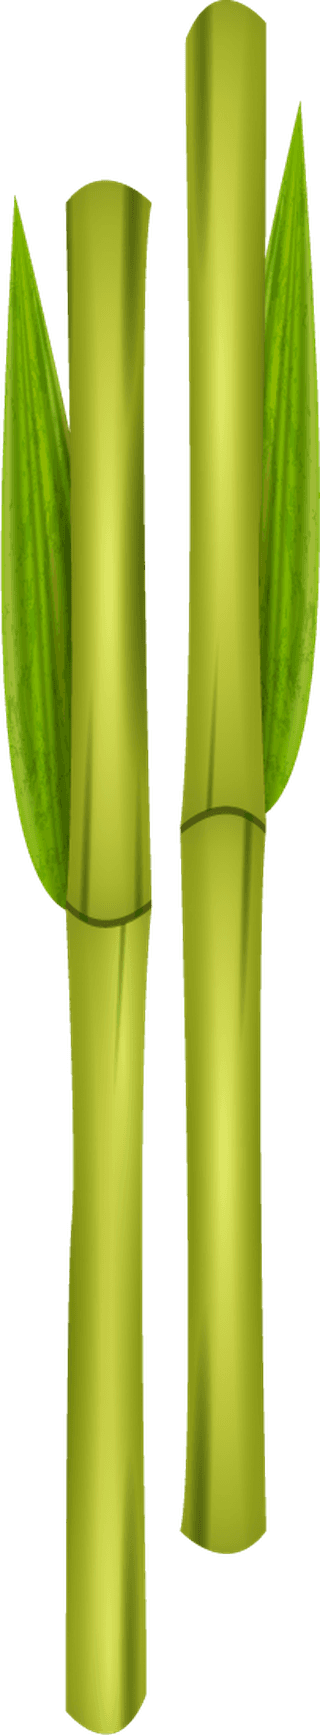 greenbamboo-decorative-elements-526186